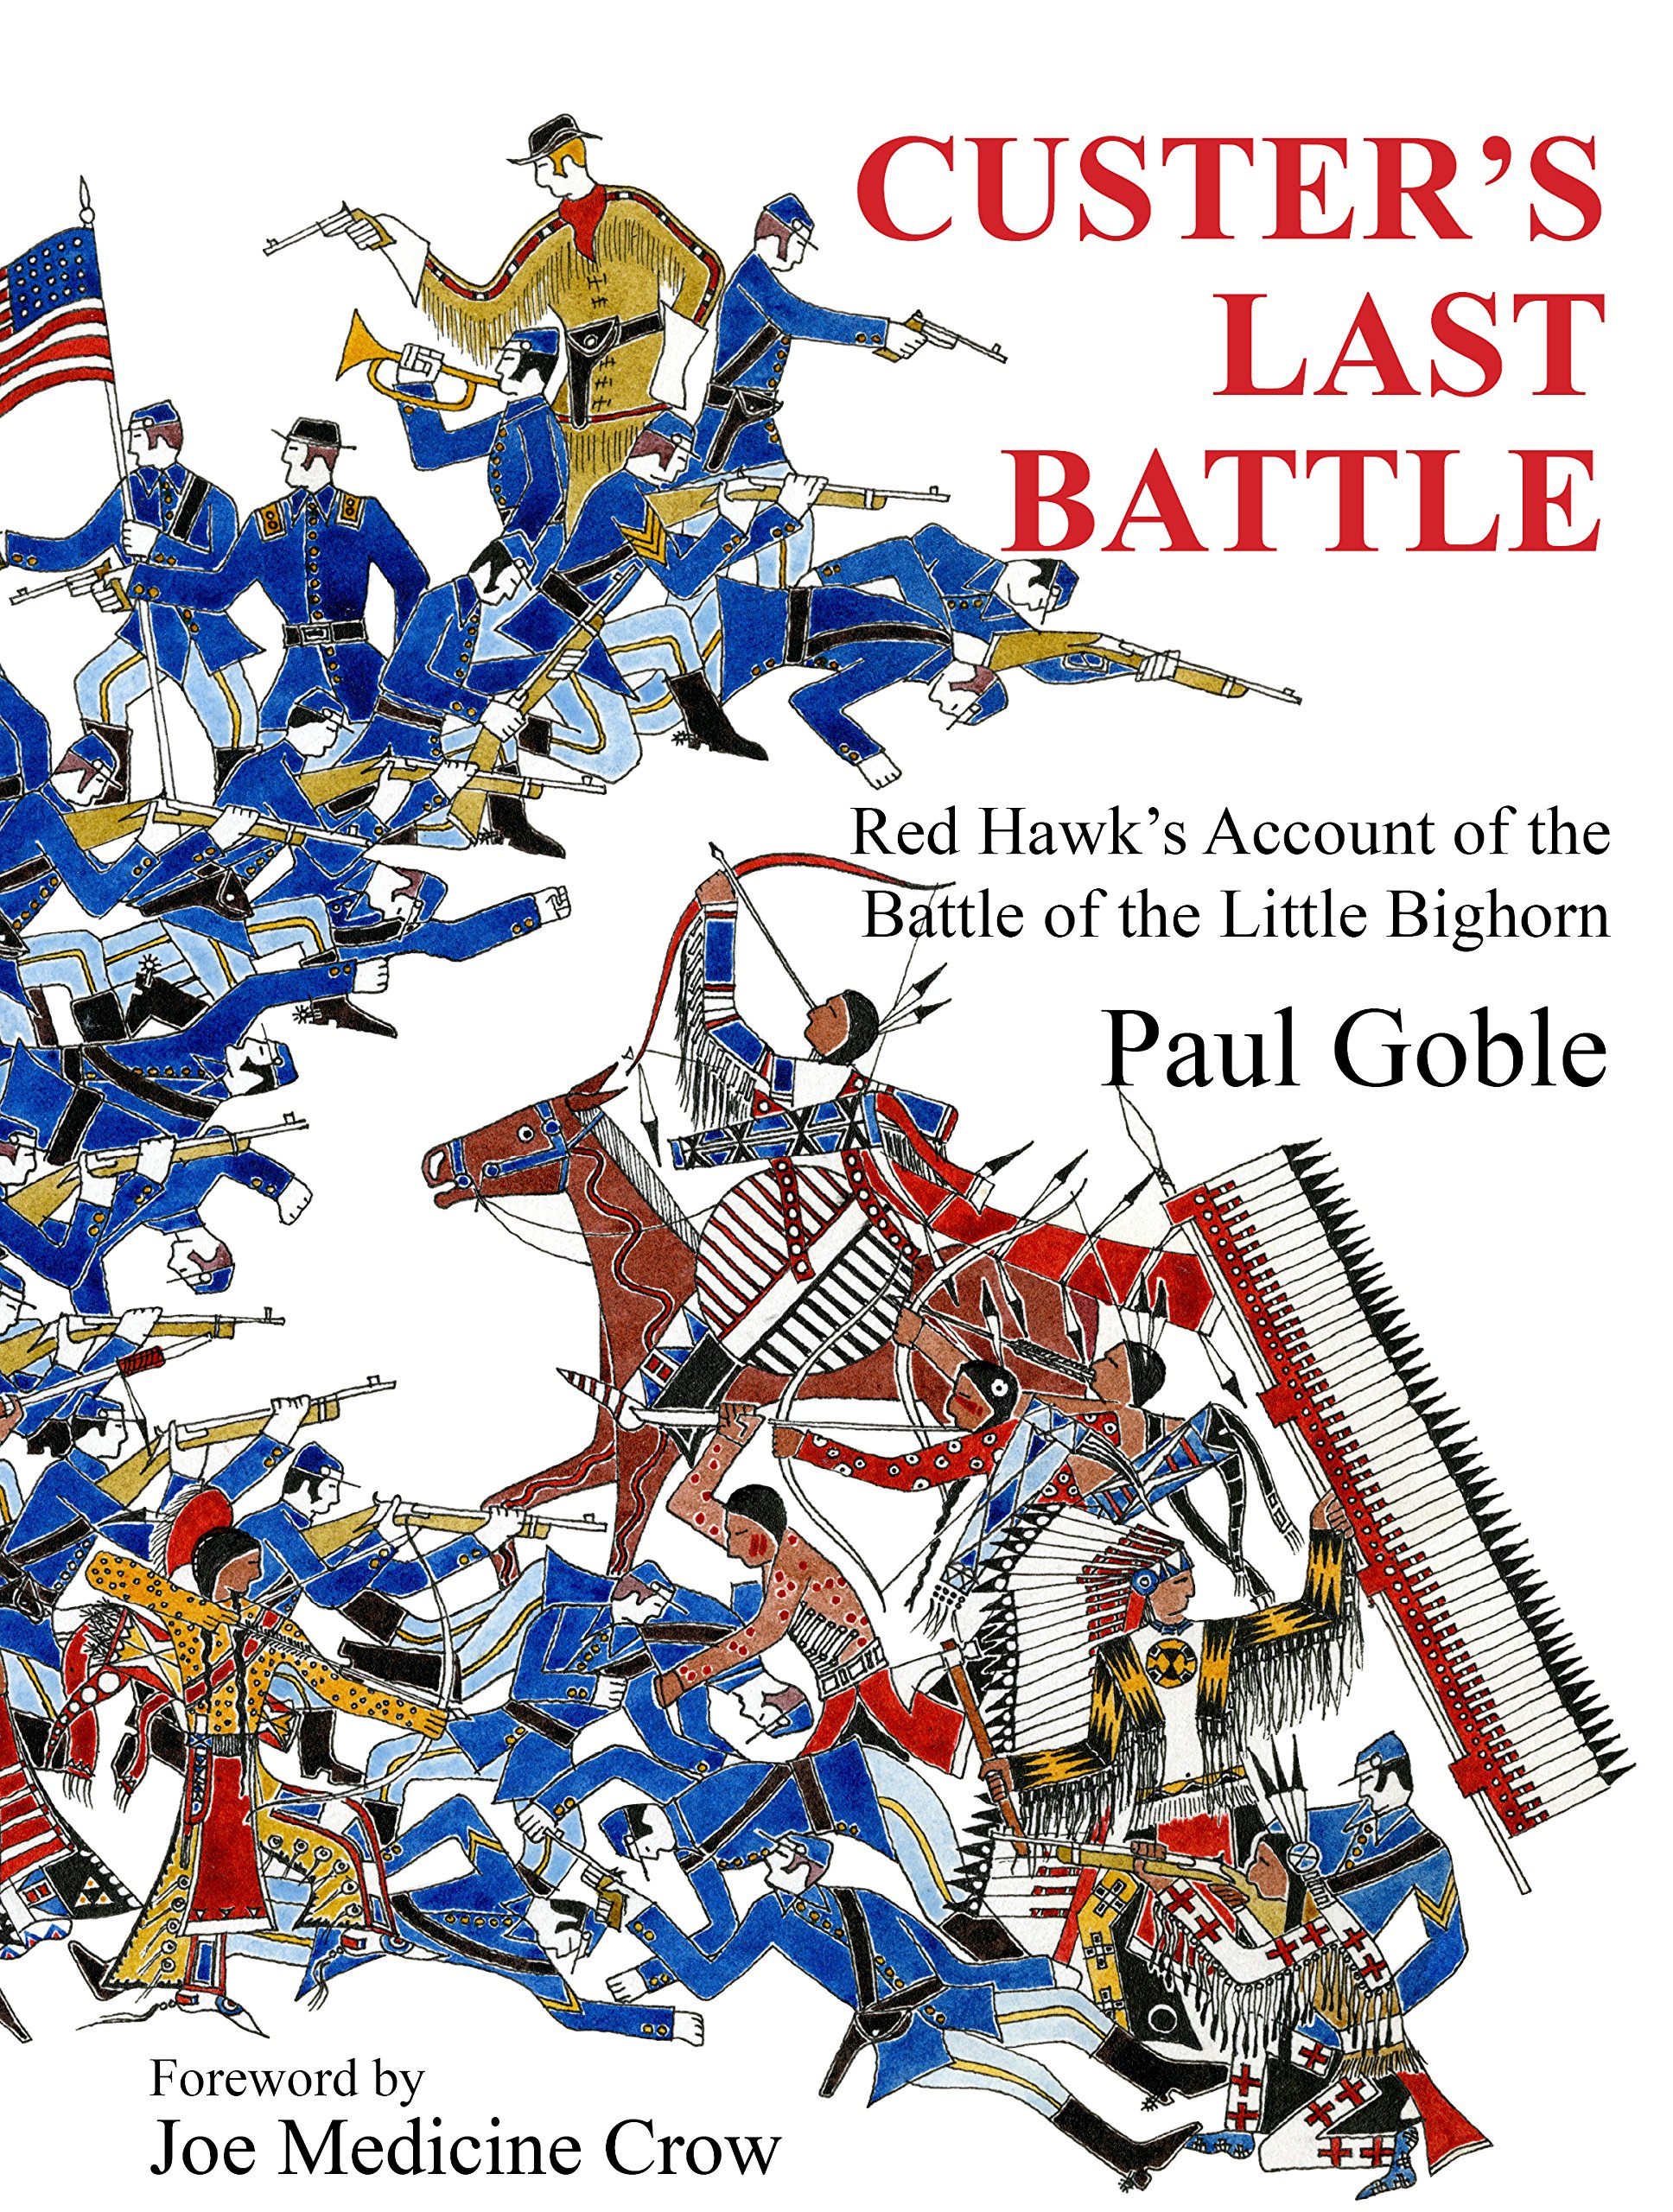 Red Hawk's account of Custer's last battle